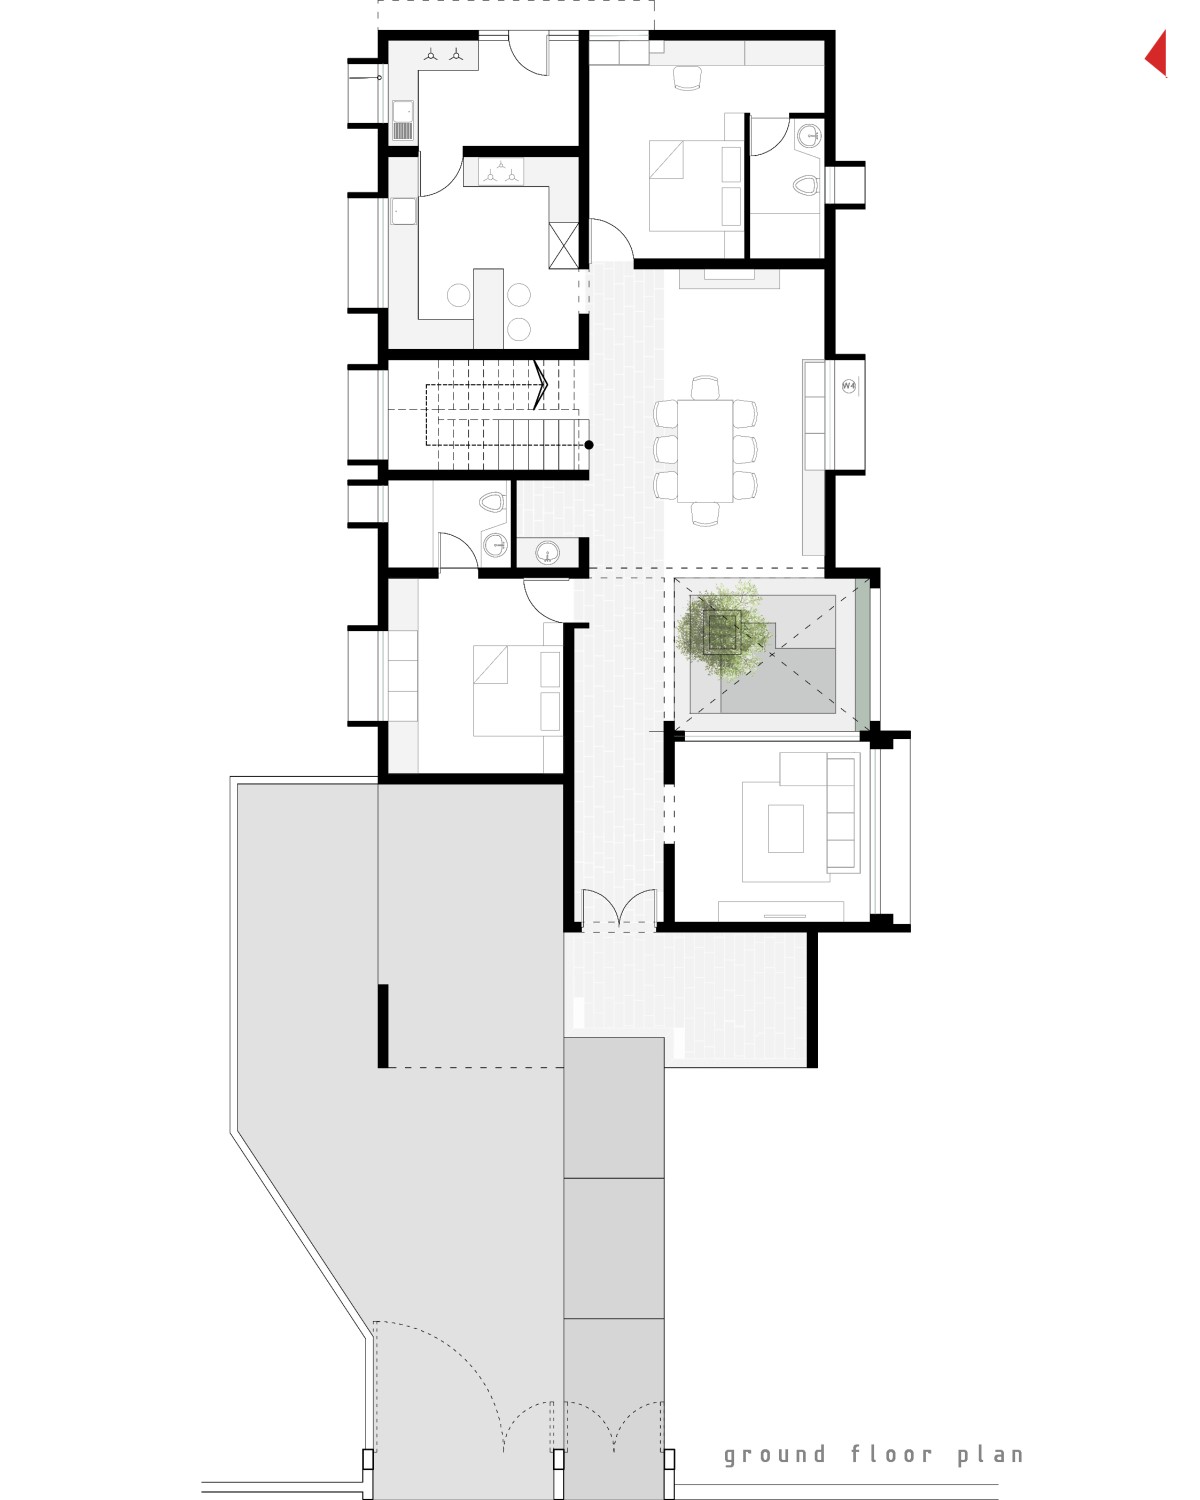 Ground floor plan of Amballoor Residence by N&RD